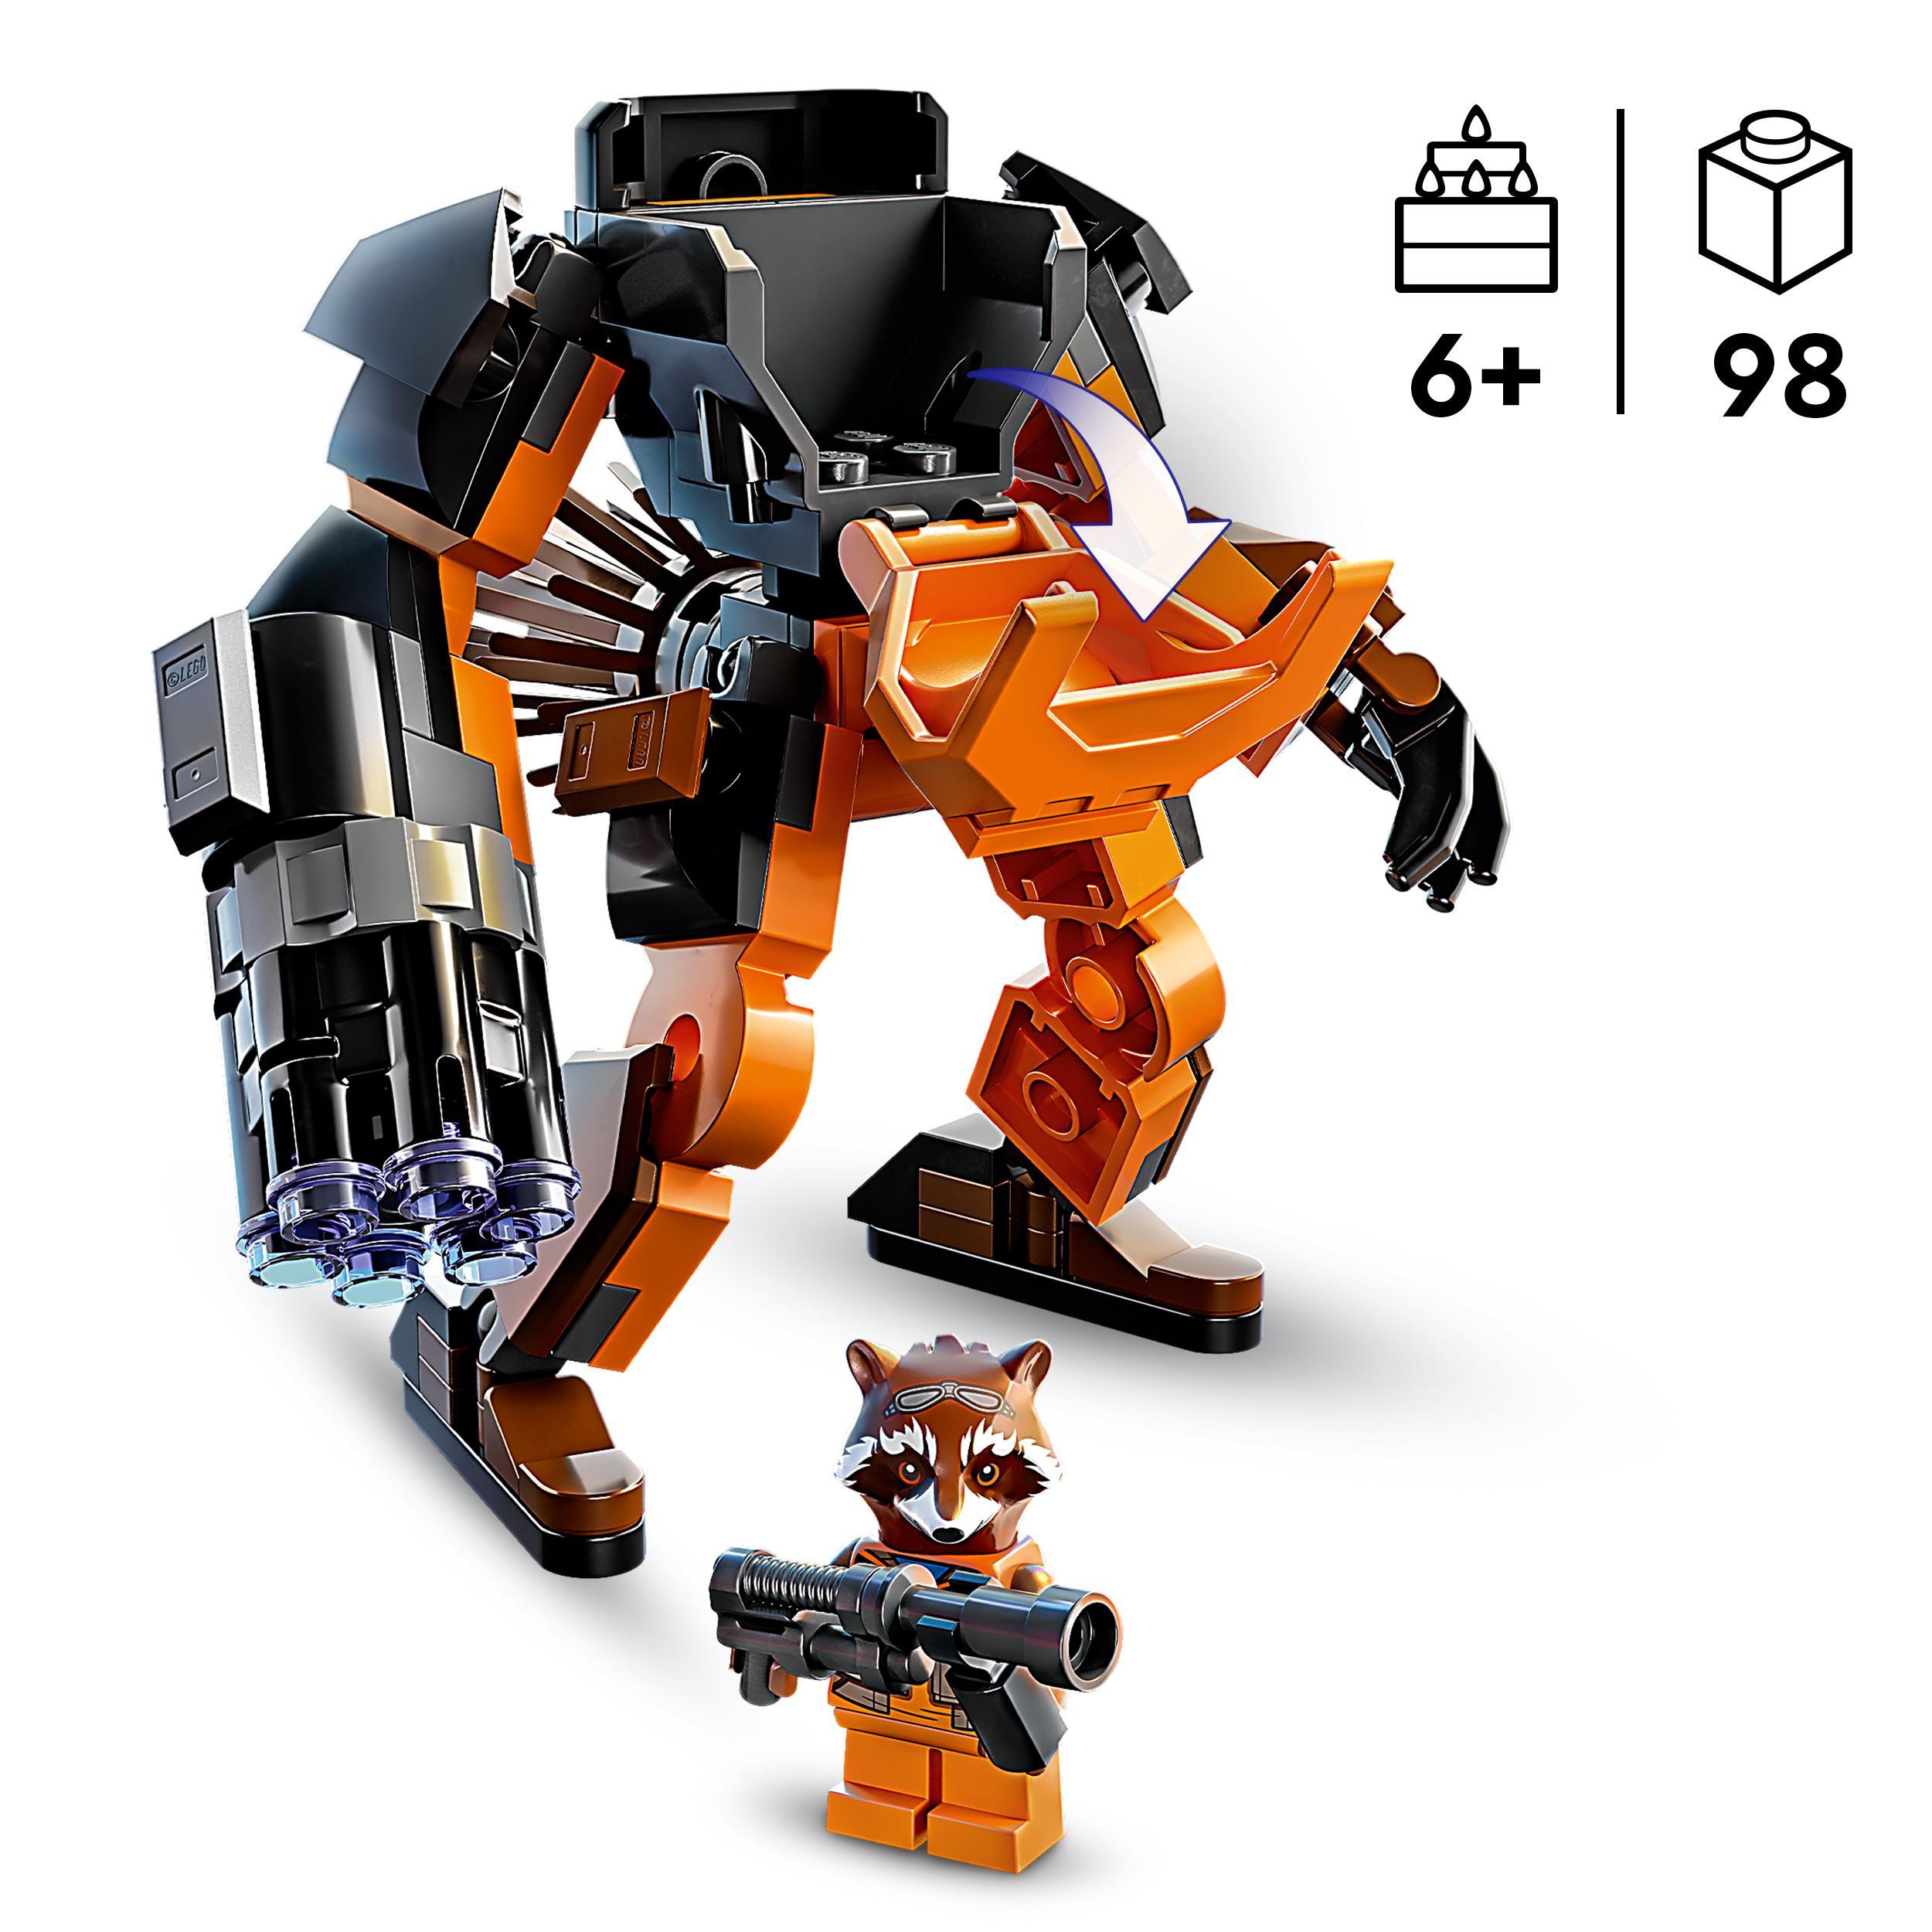 Lego marvel 76243 armatura mech rocket, action figure supereroe guardiani della galassia, idea regalo avengers per bambini - LEGO SUPER HEROES, Avengers